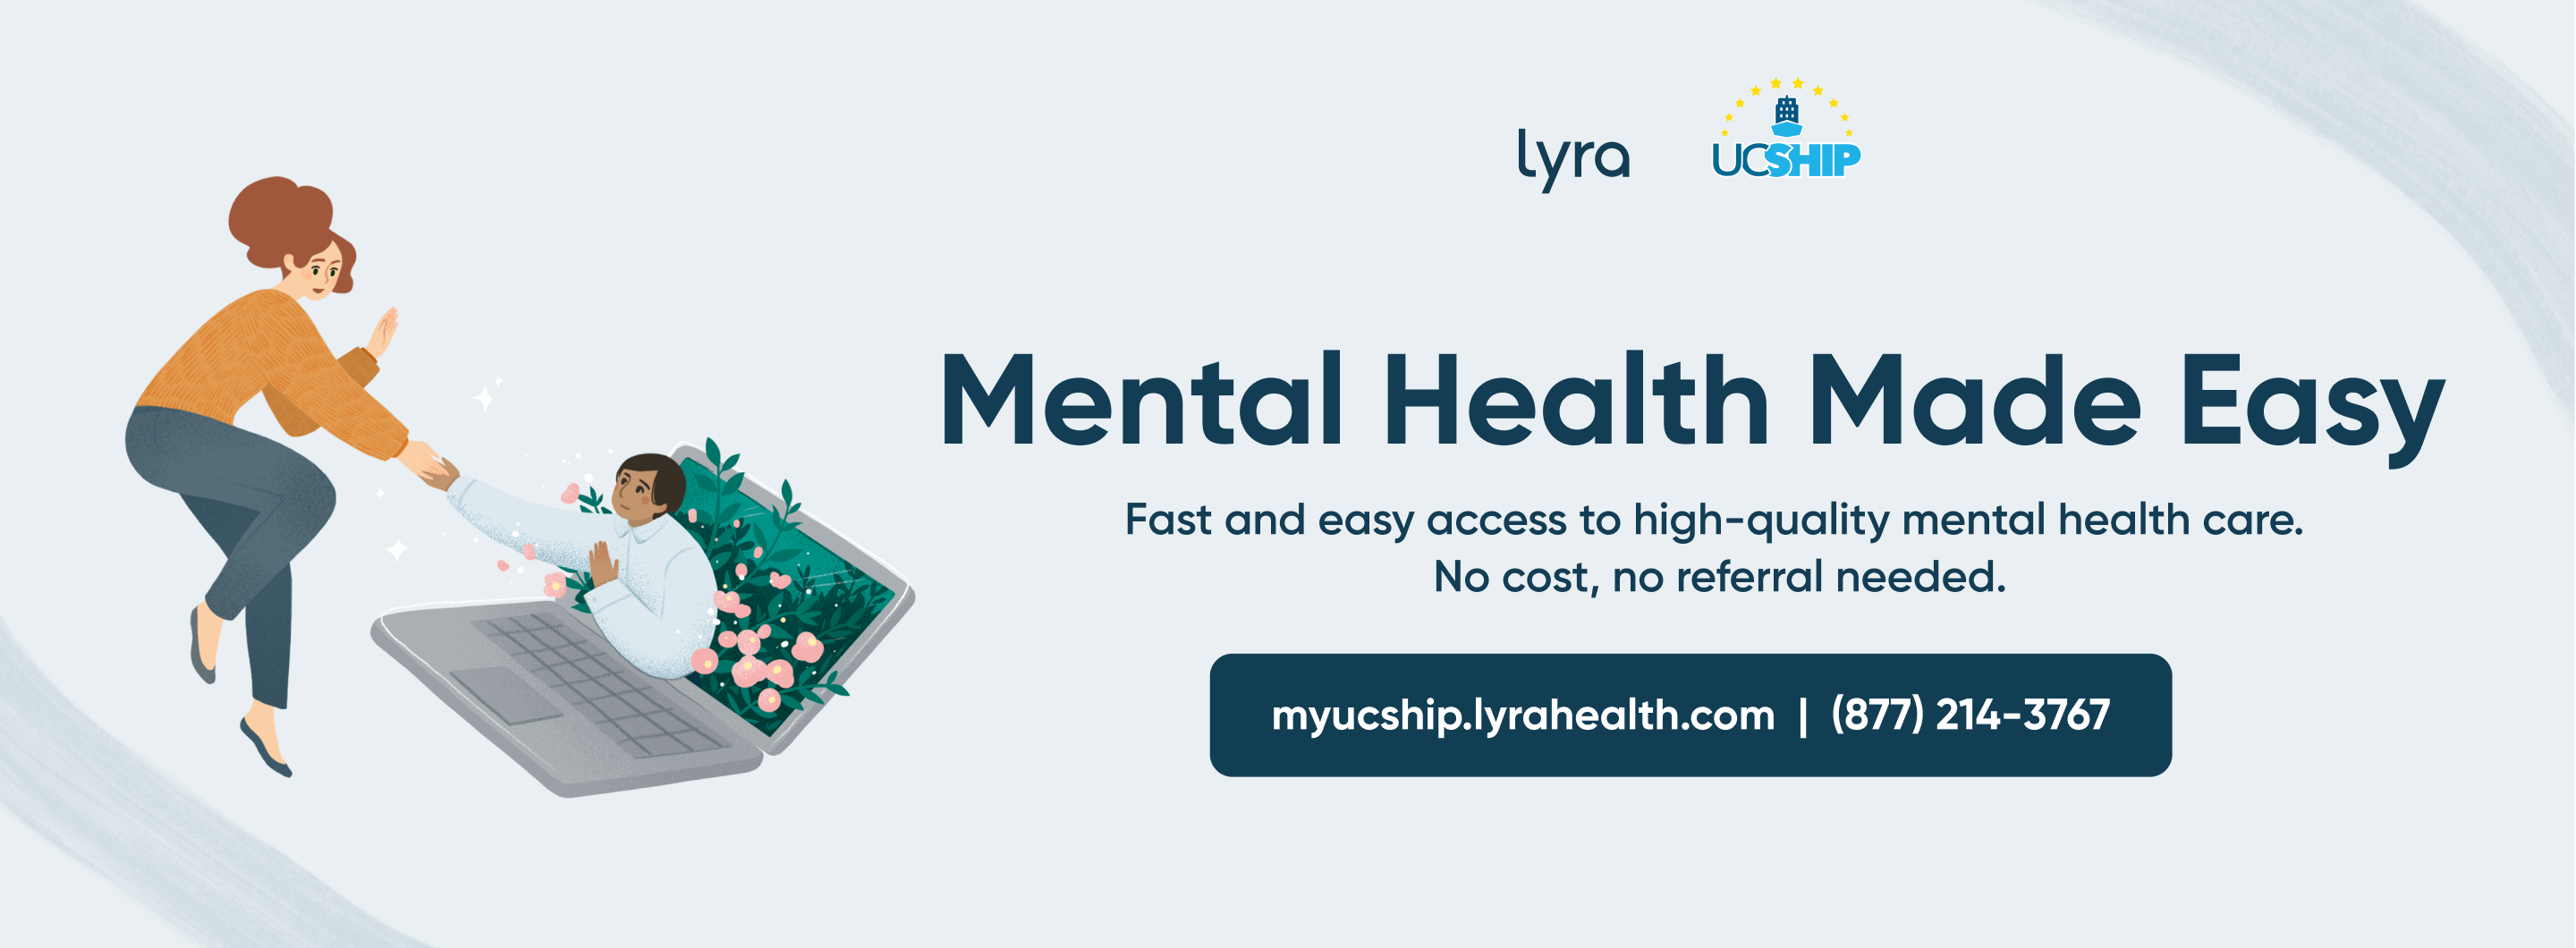 Lyra: mental health made easy promo banner